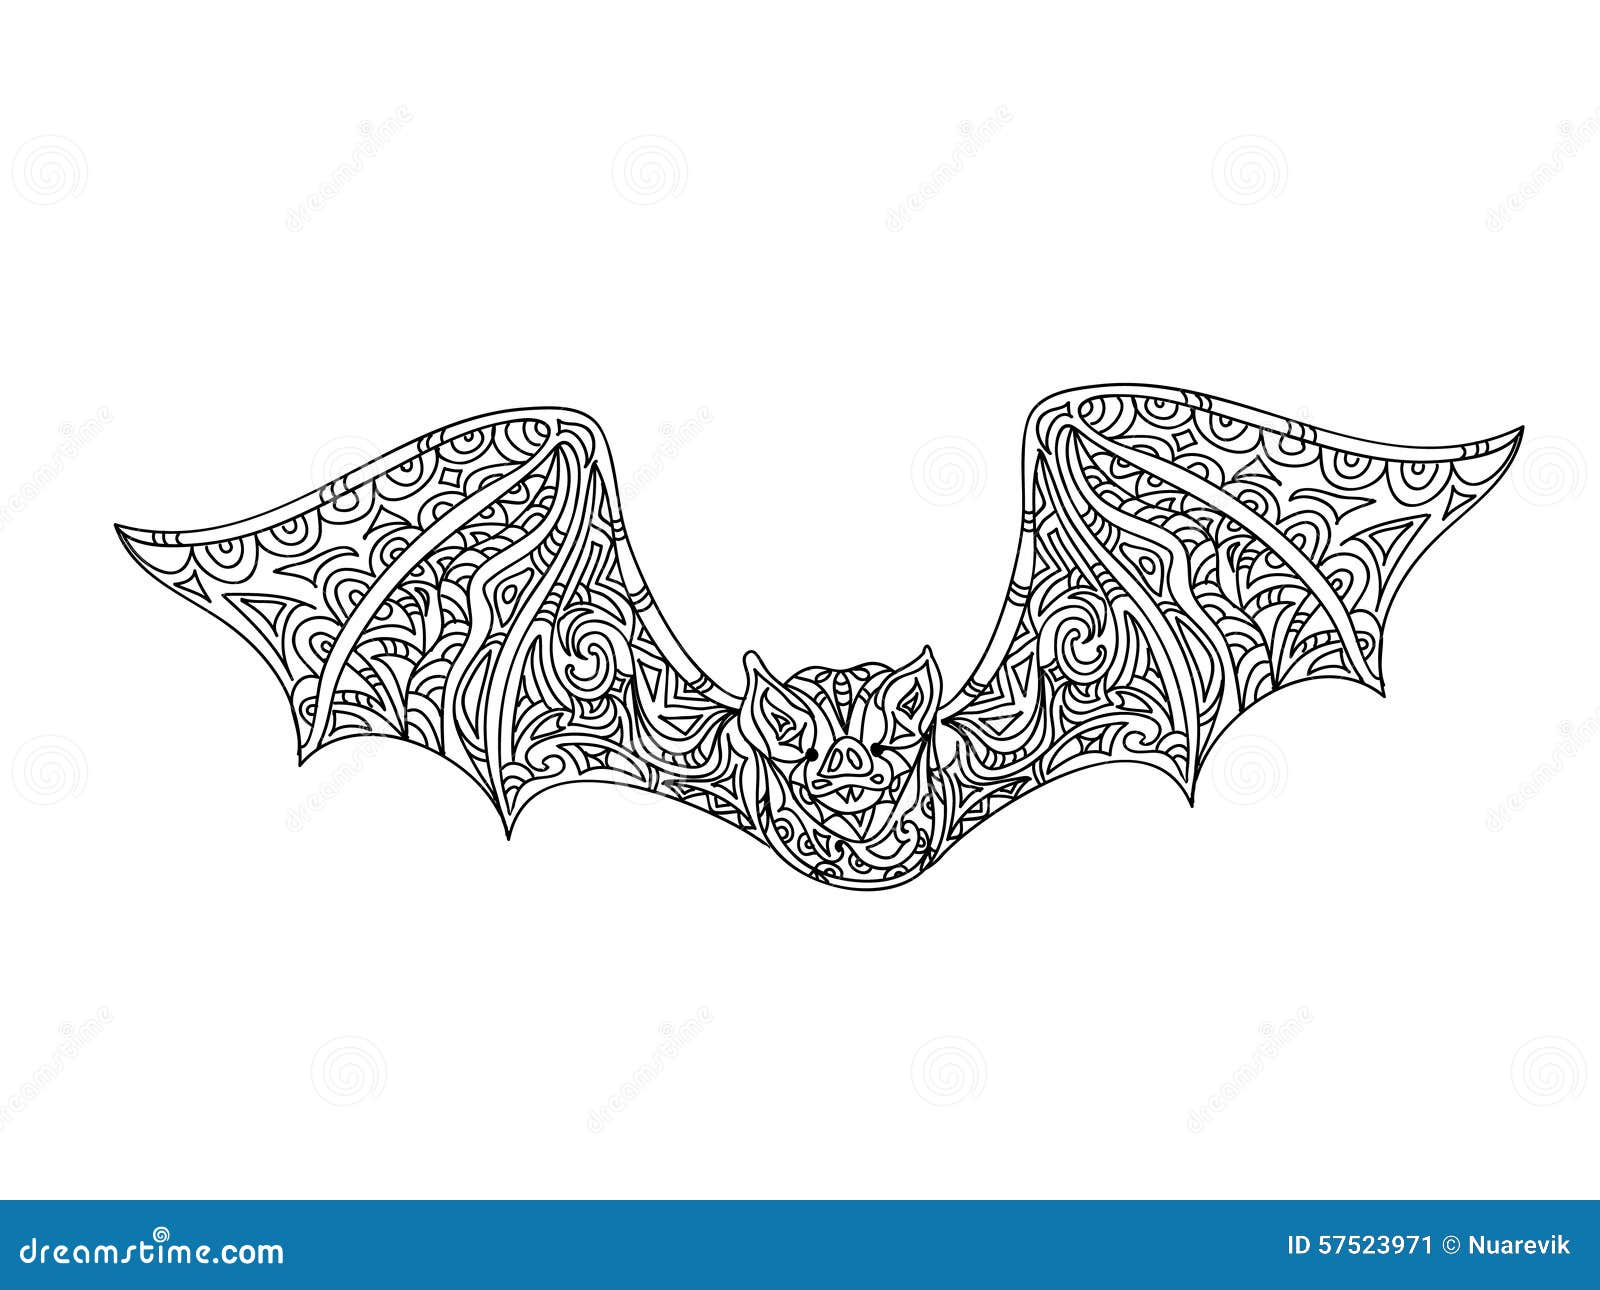 Bat coloring page stock illustration illustration of nature